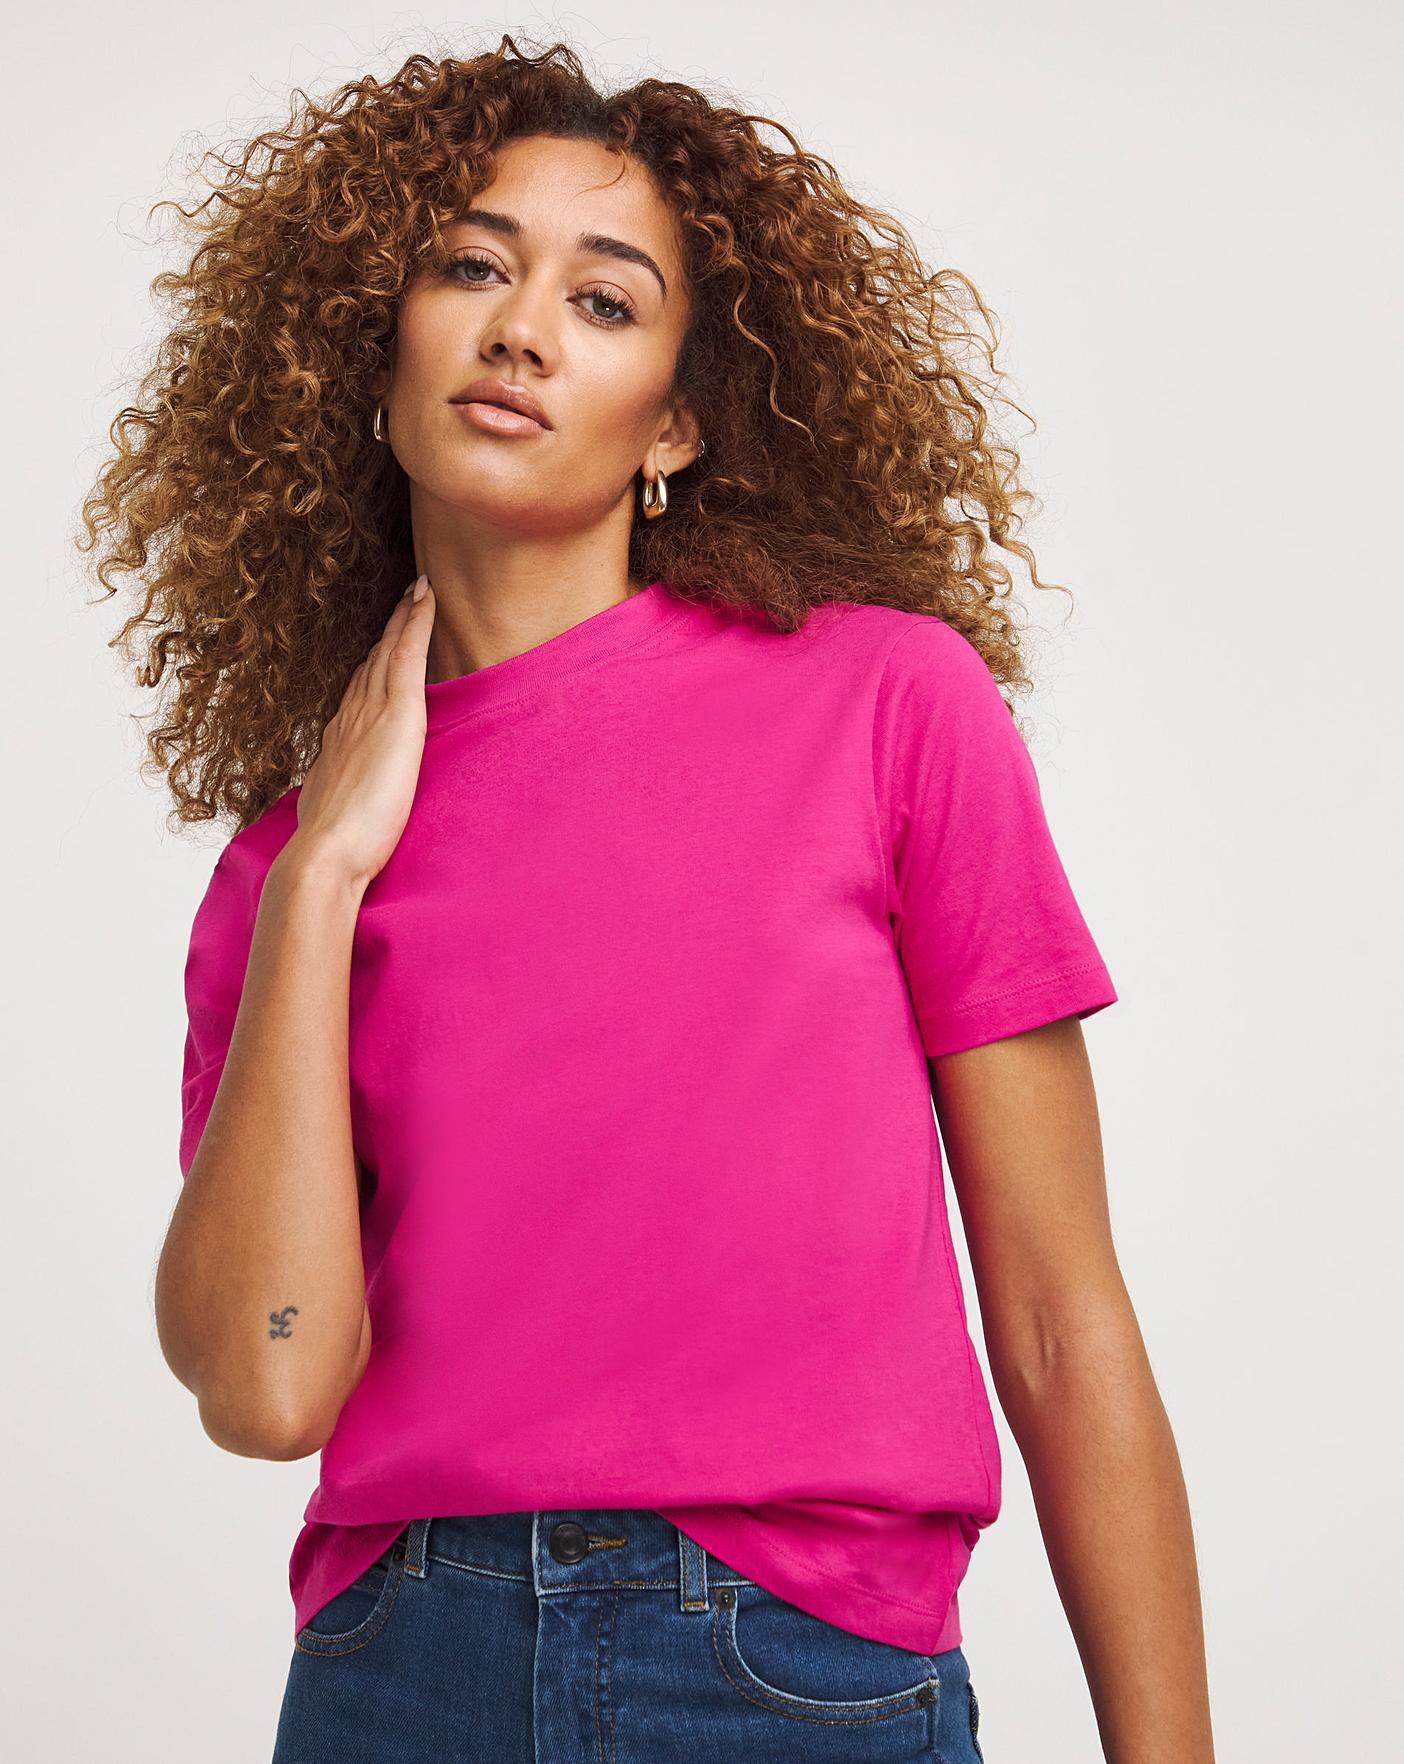 Women's Pink T-Shirt, Explore our New Arrivals